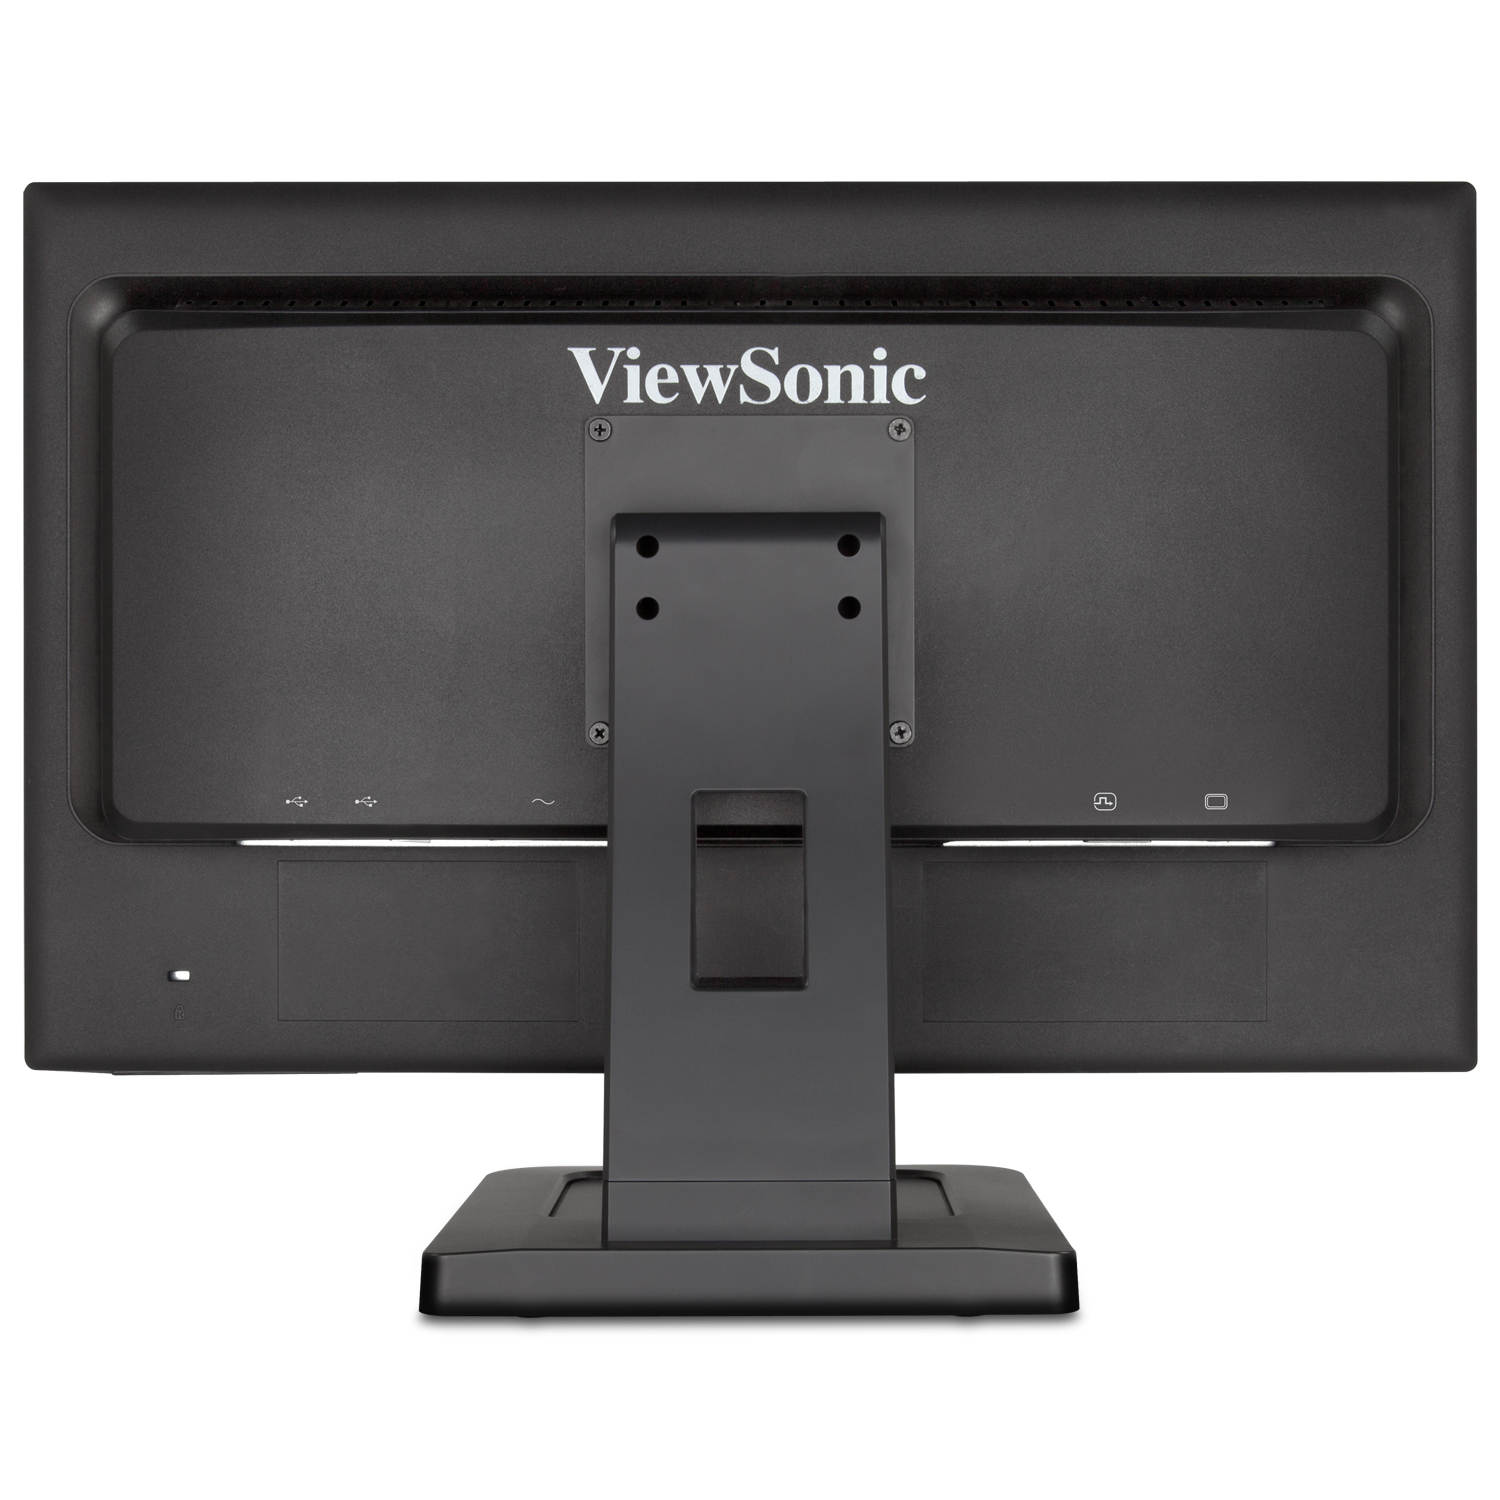 ViewSonic TD2220 - LED monitor - 22" (21.5" viewable) - touchscreen - 1920 x 1080 Full HD (1080p) - TN - 200 cd/m������ - 1000:1 - 5 ms - DVI-D, VGA - speakers - image 5 of 8